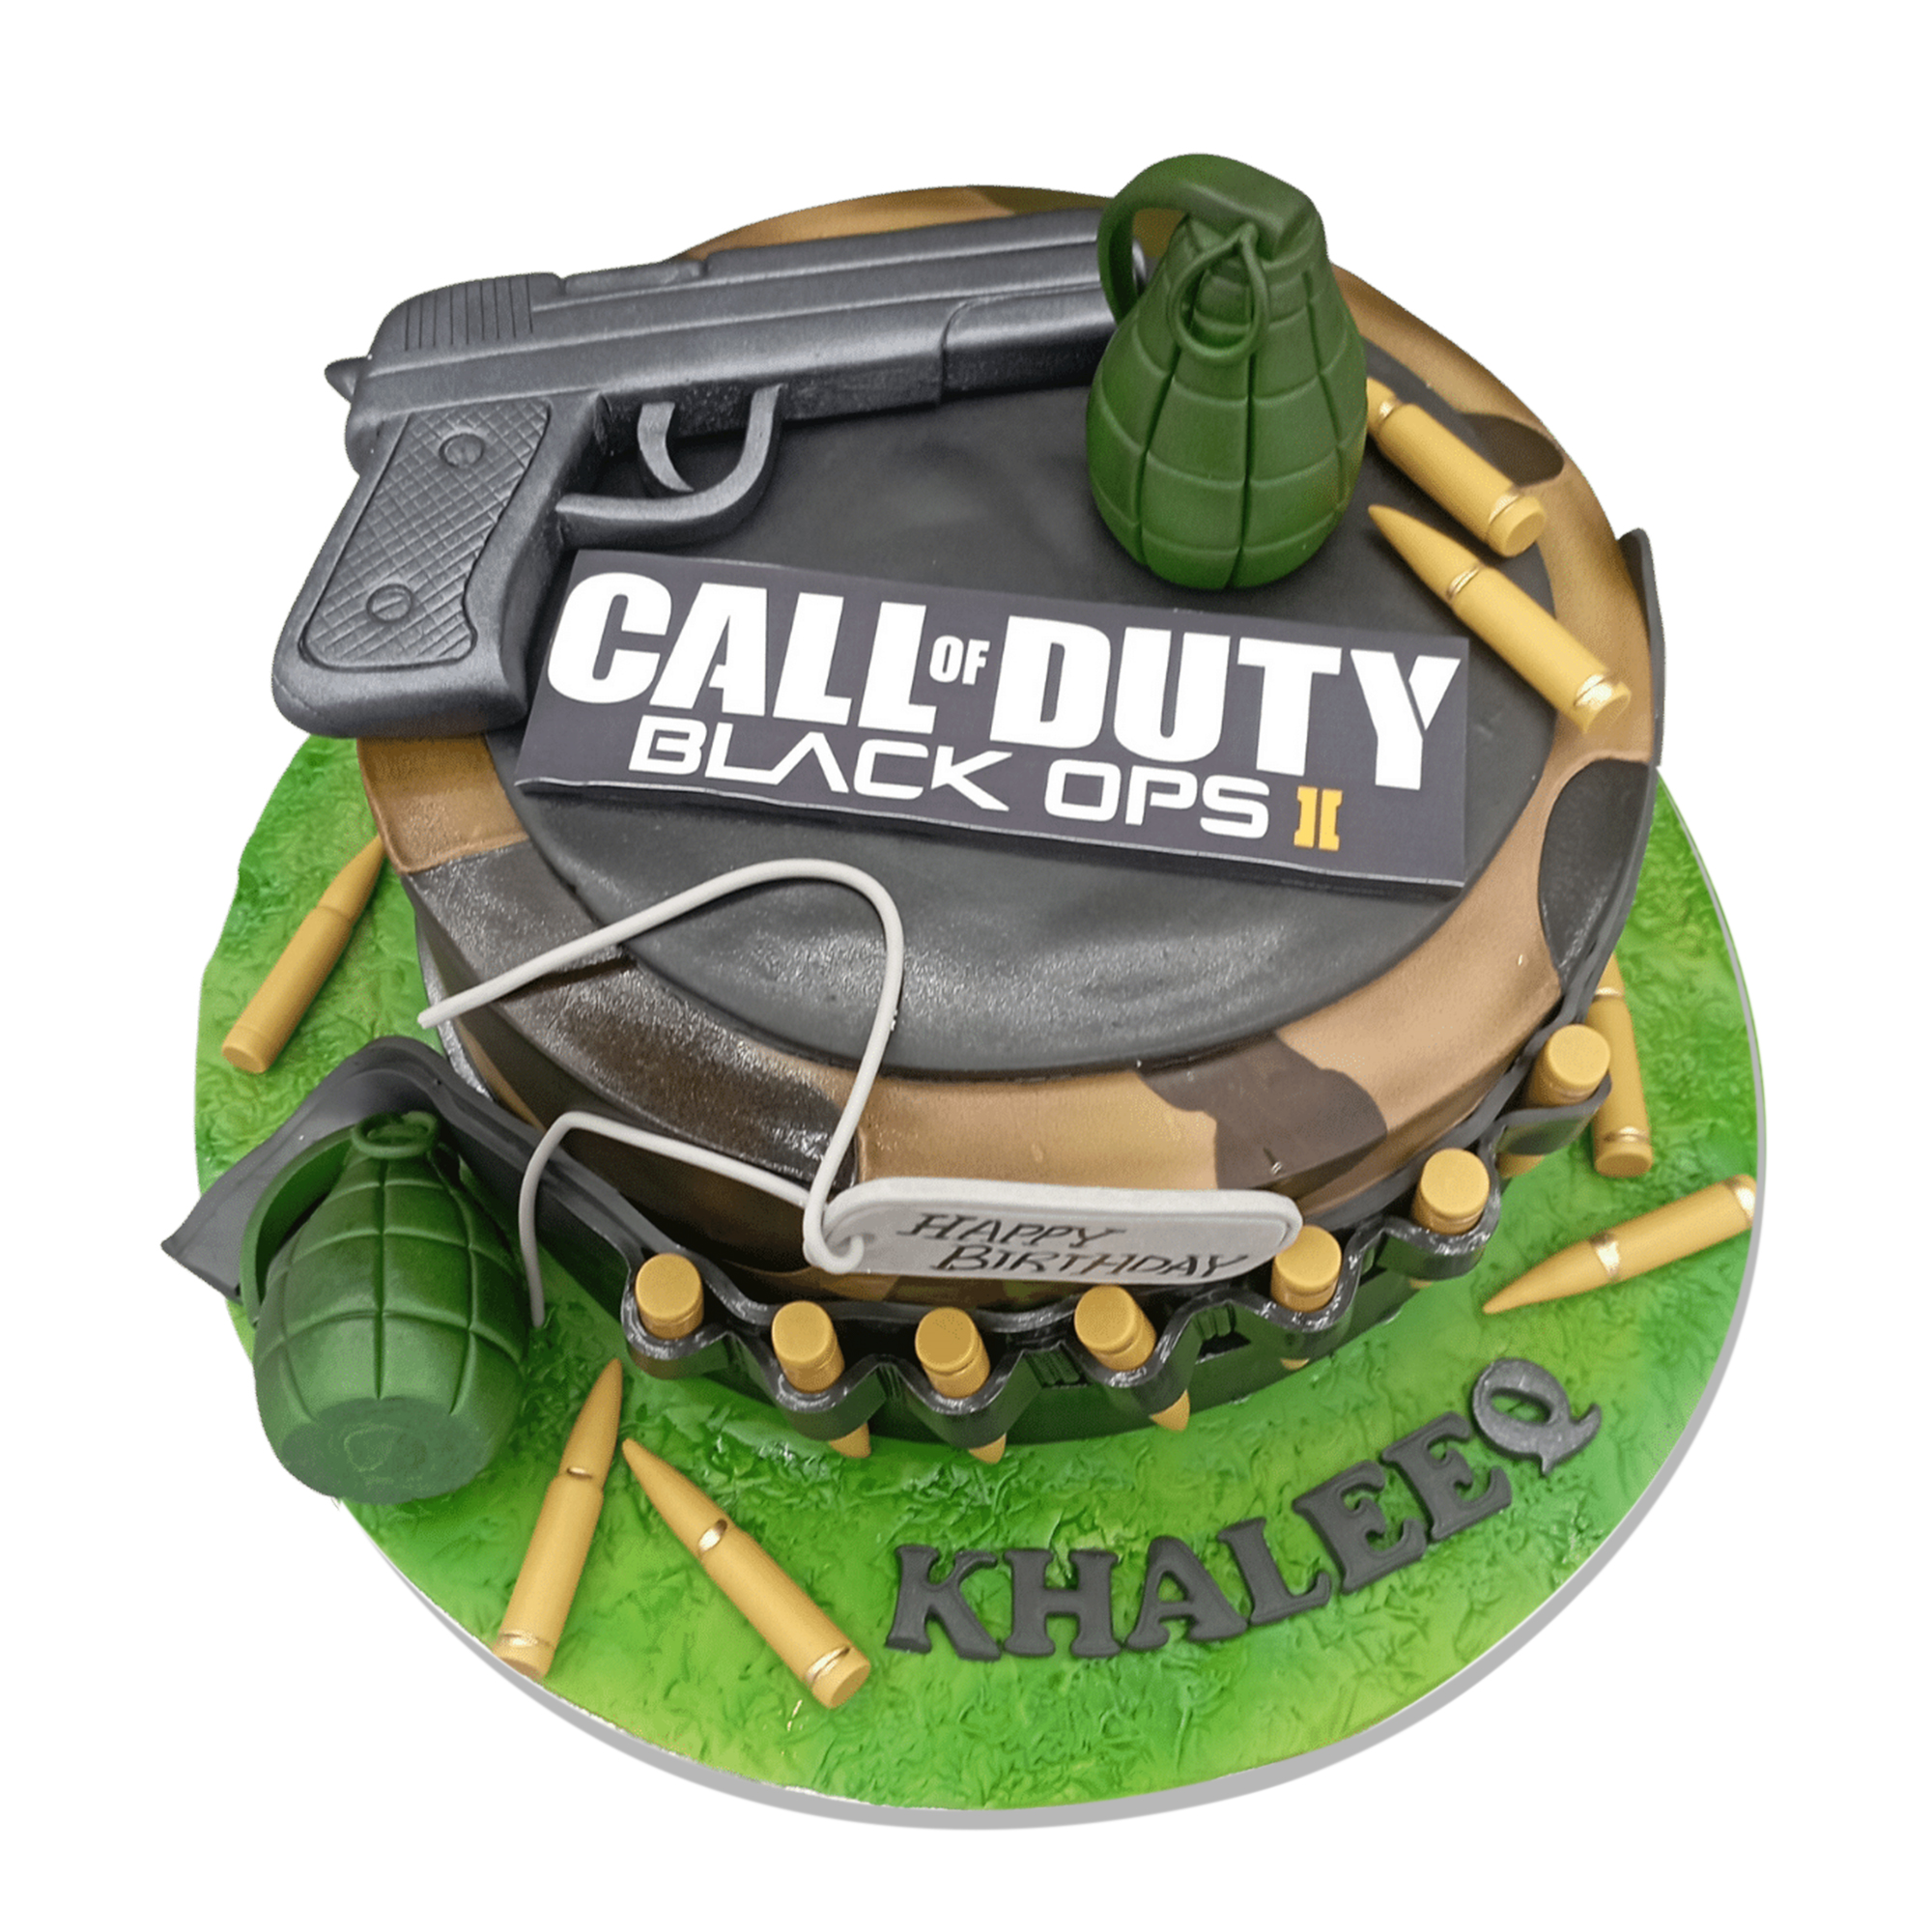 Call of duty Boys Birthday Cake